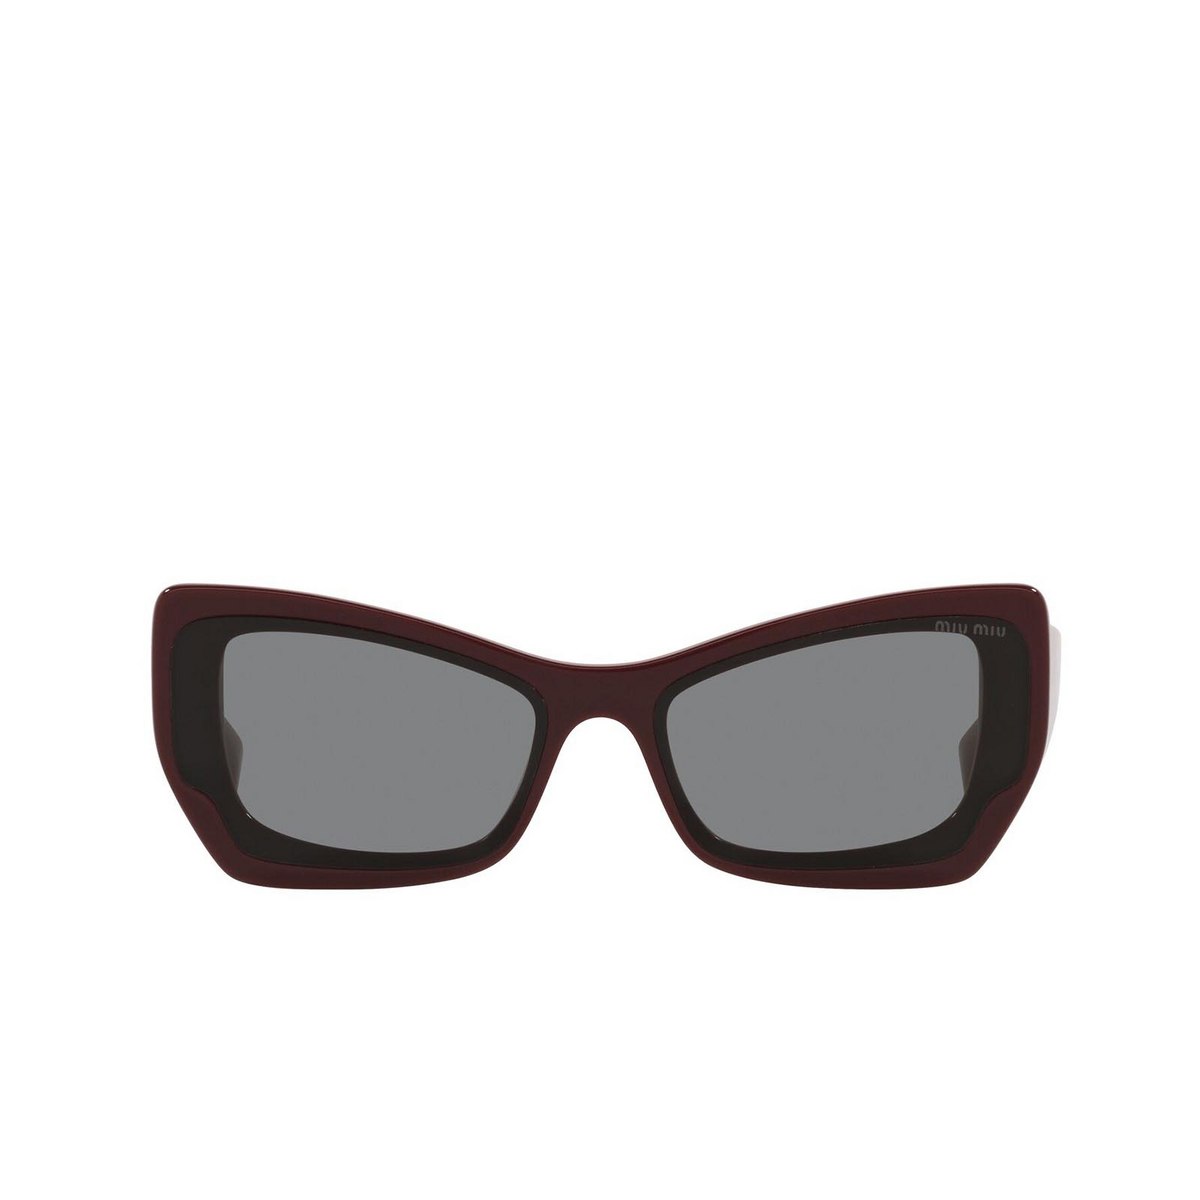 Miu Miu® Irregular Sunglasses: MU 07XS color Pink Bordeaux 01T02N - front view.